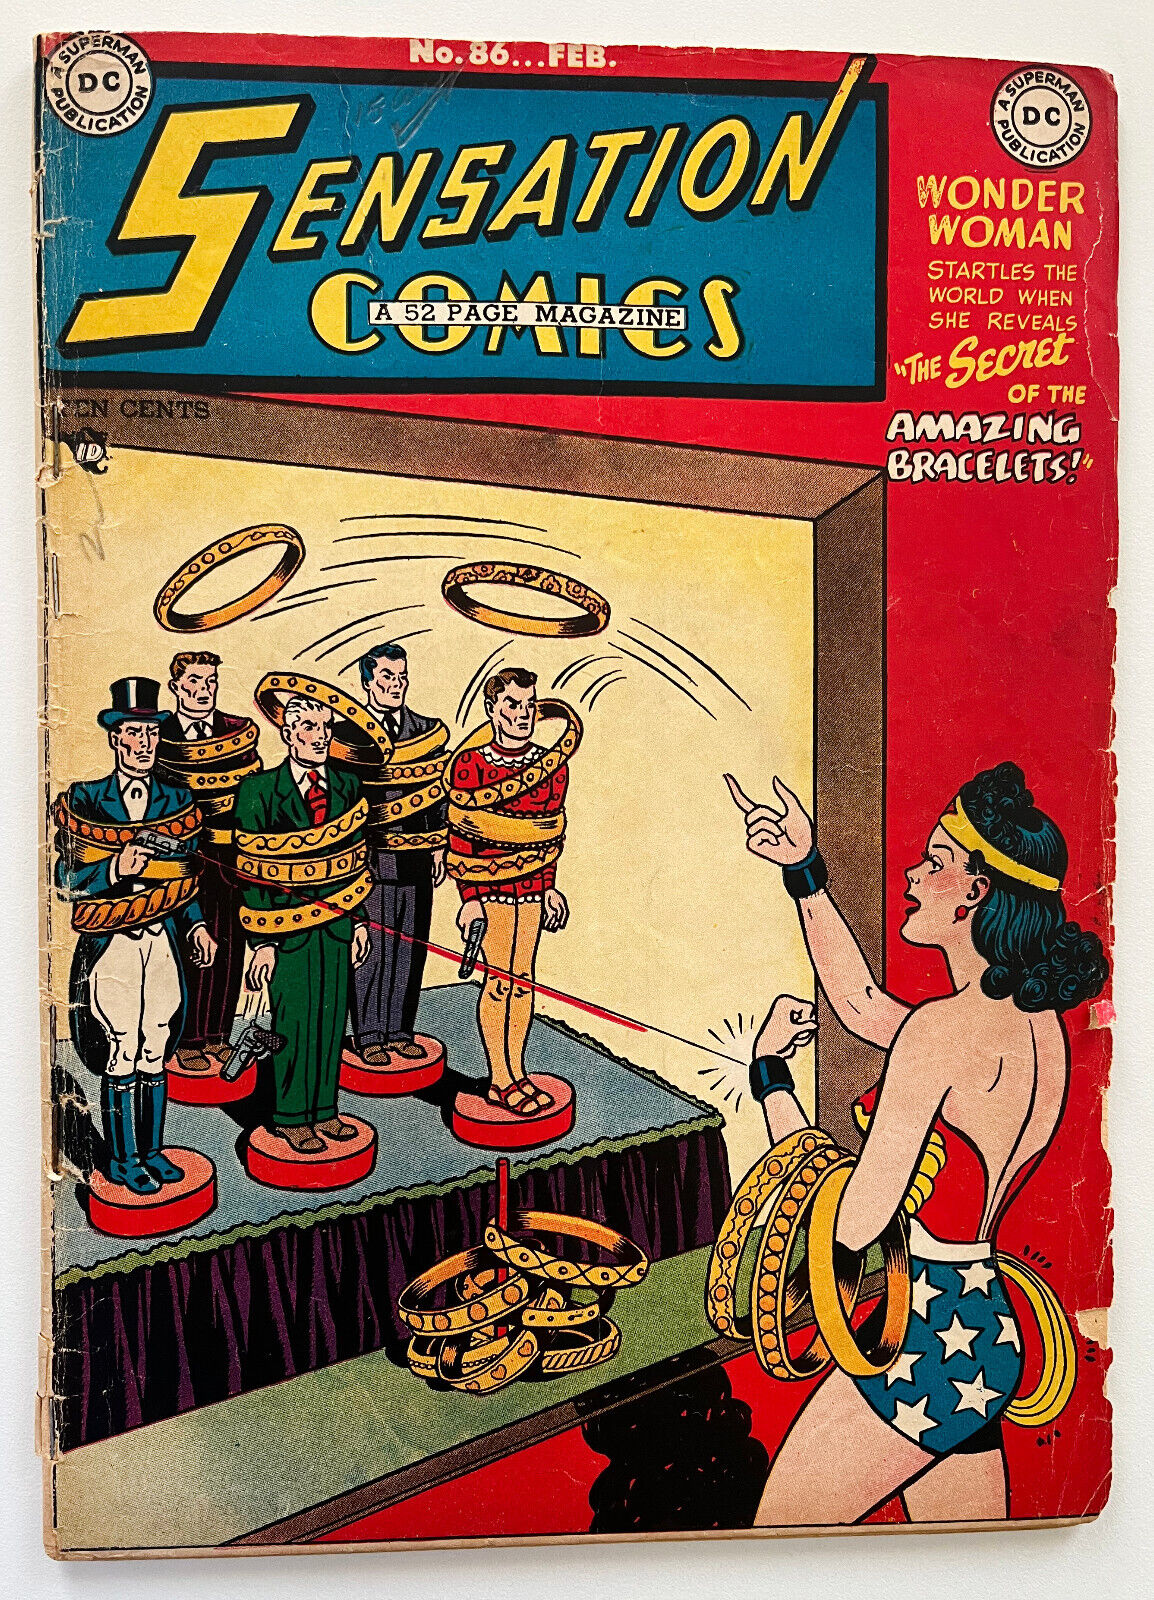 Original, Genuine 1949 Sensation Comics #86 - Wonder Woman - DC Comic Book